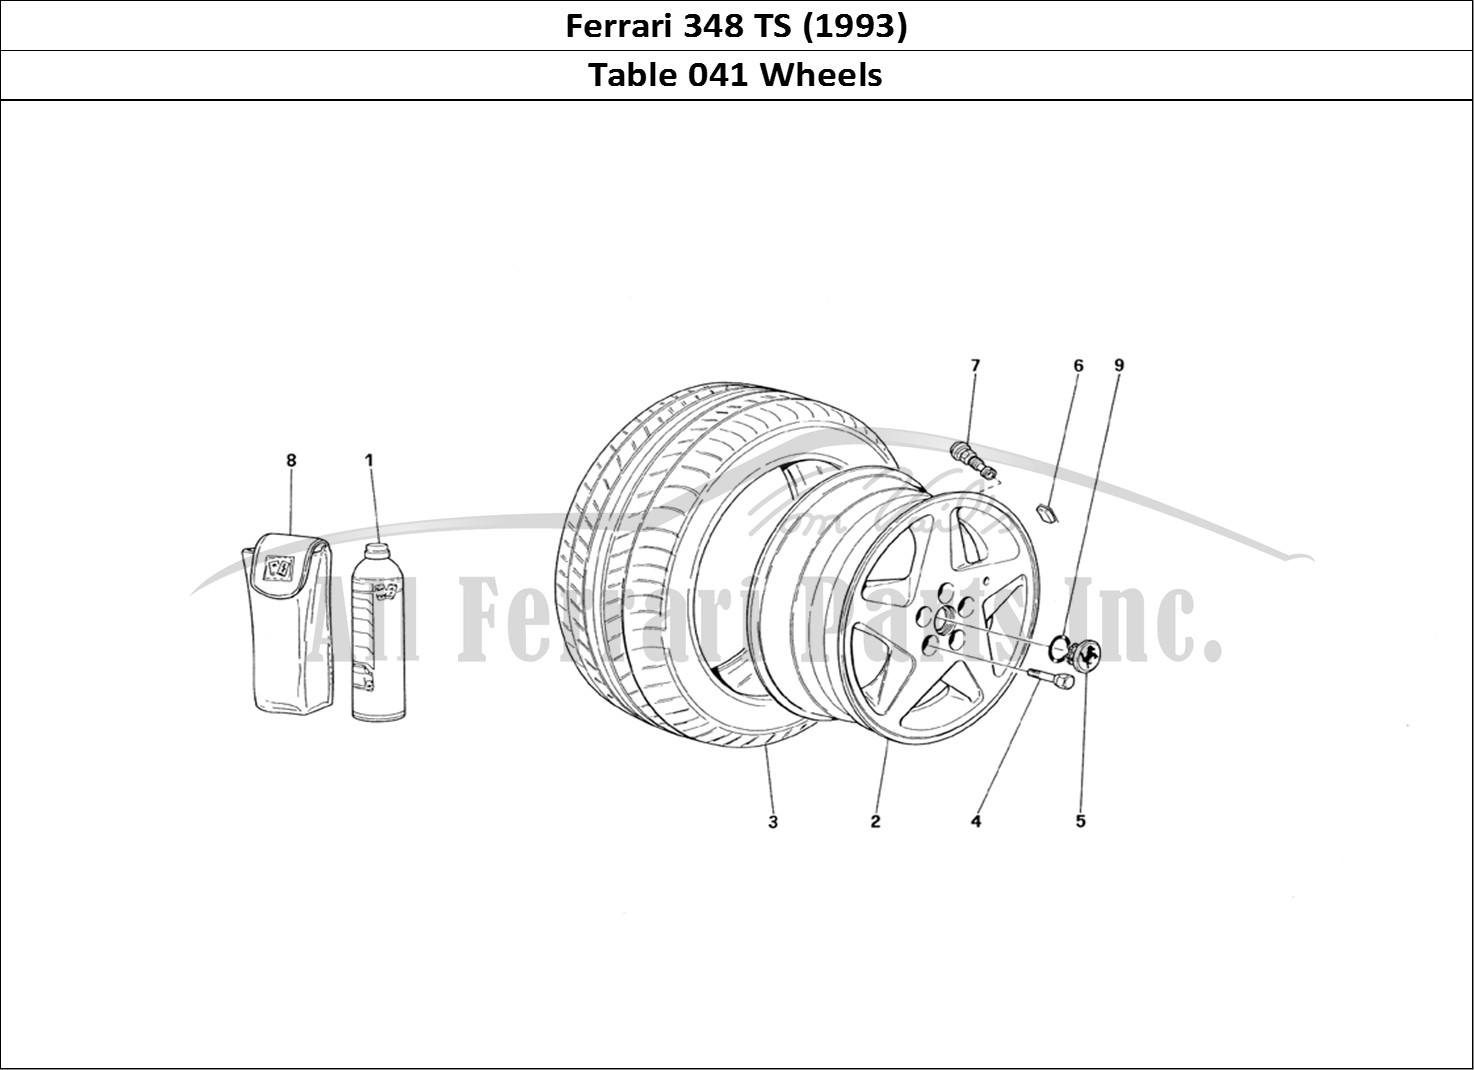 Ferrari Parts Ferrari 348 TB (1993) Page 041 Wheels